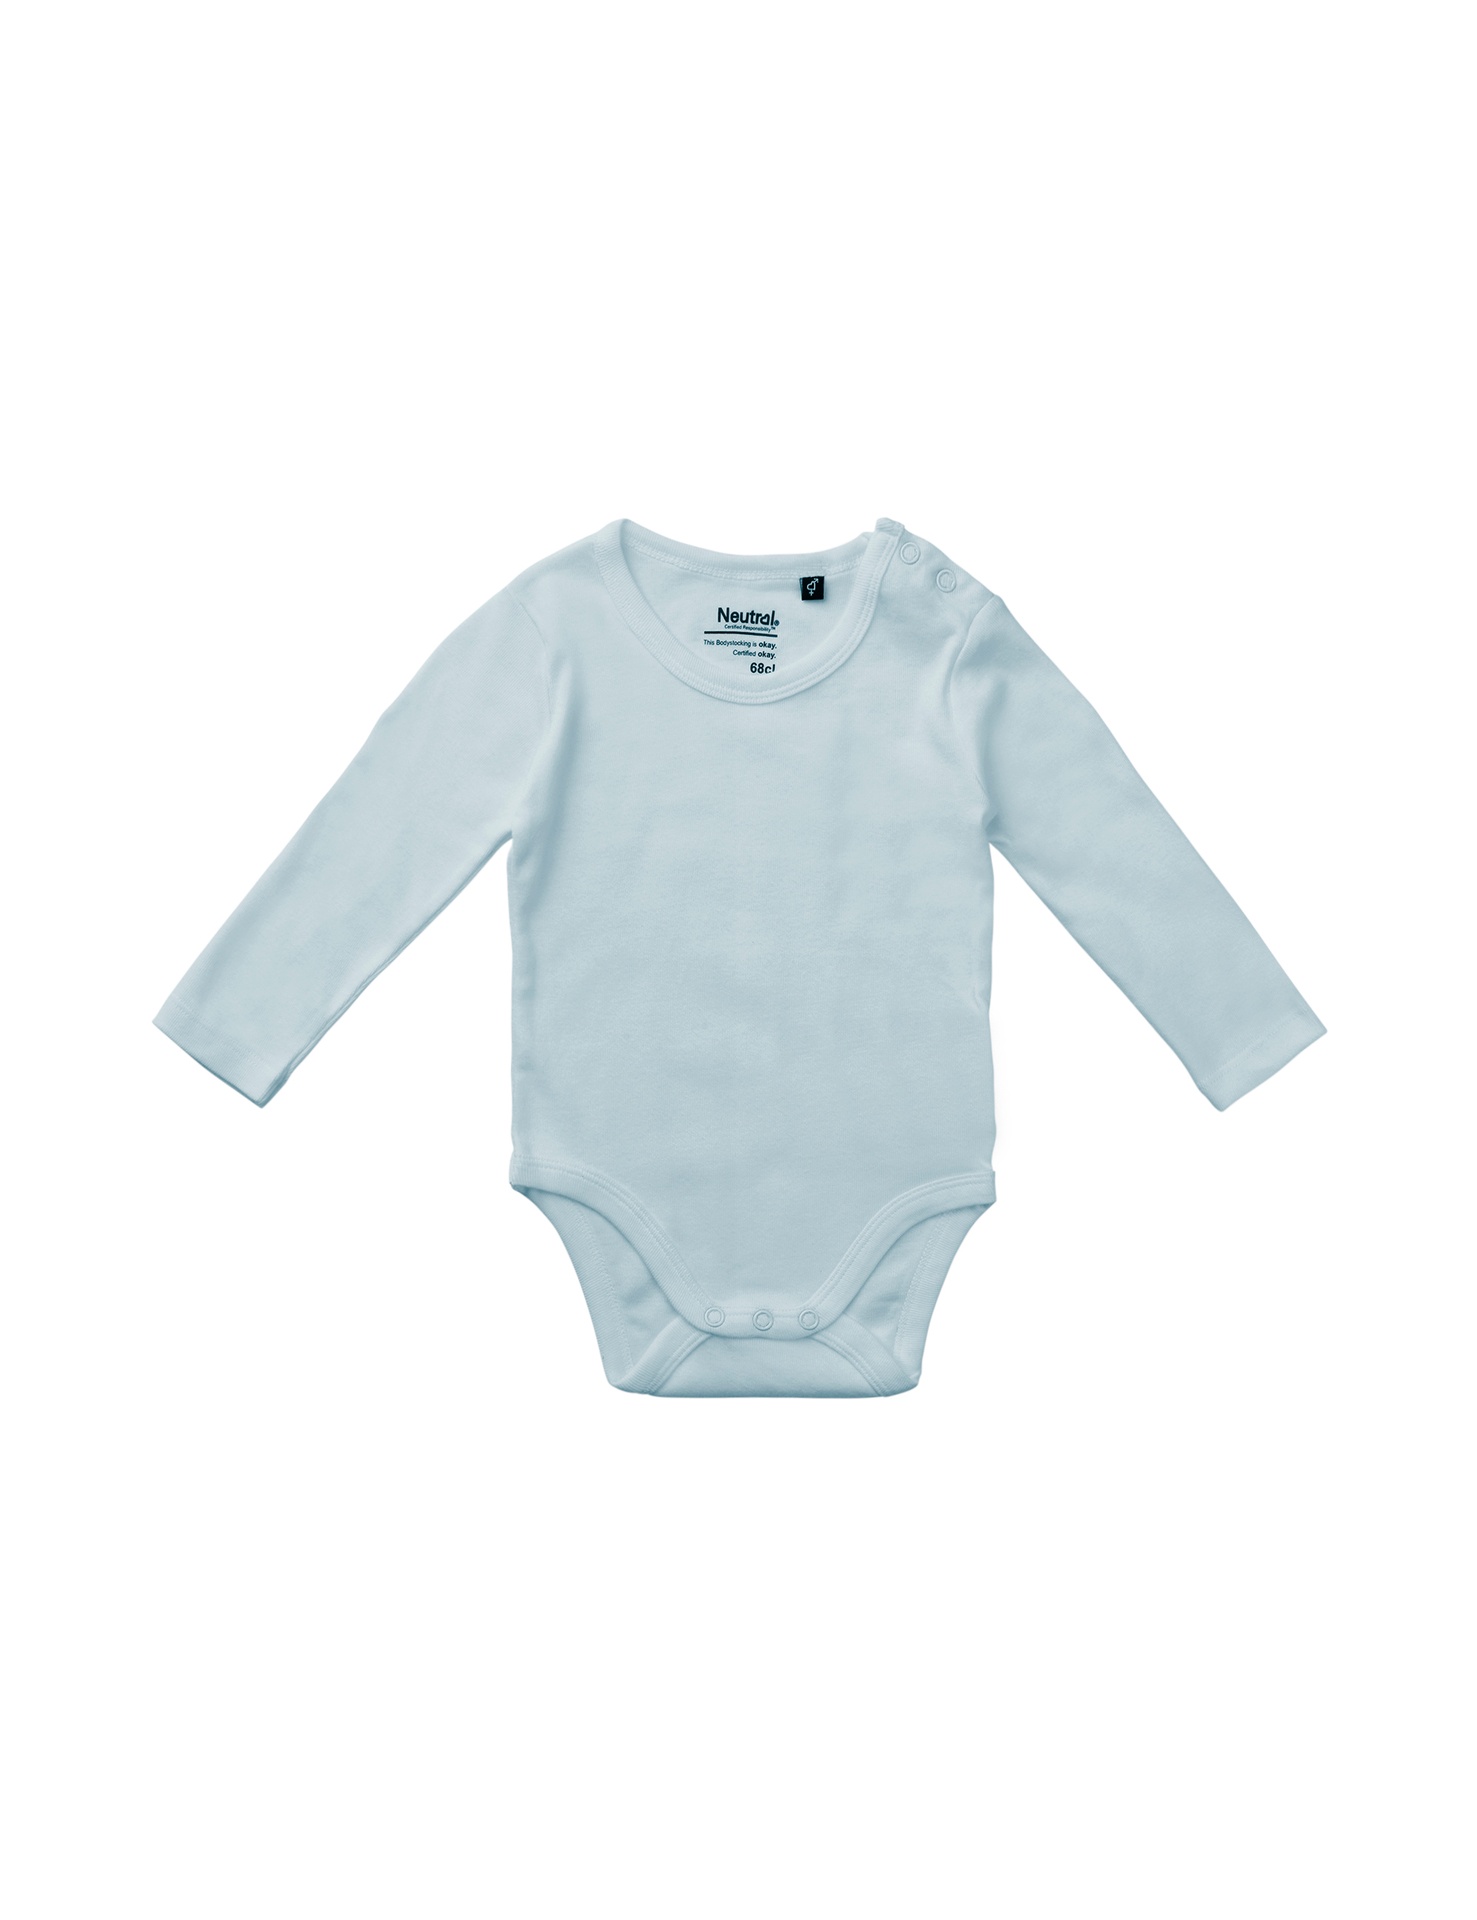 [PR/05755] Babies Long Sleeve Bodystocking (Light Blue 69, 62 cm)